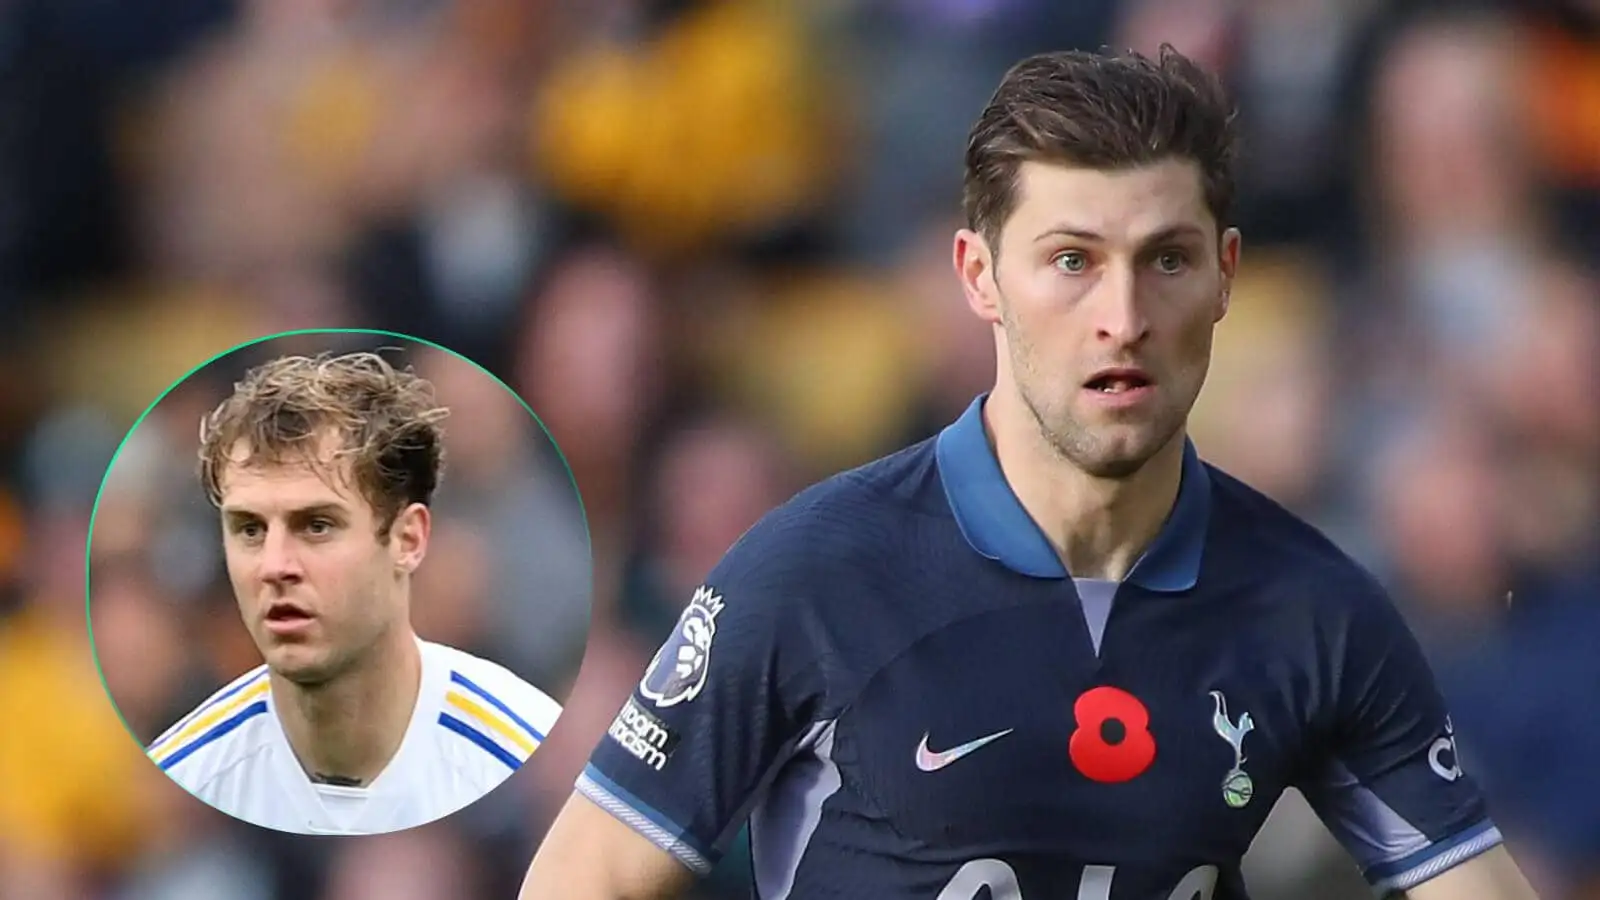 Joe Rodon move to Leeds given thumbs up by Tottenham teammate Ben Davies